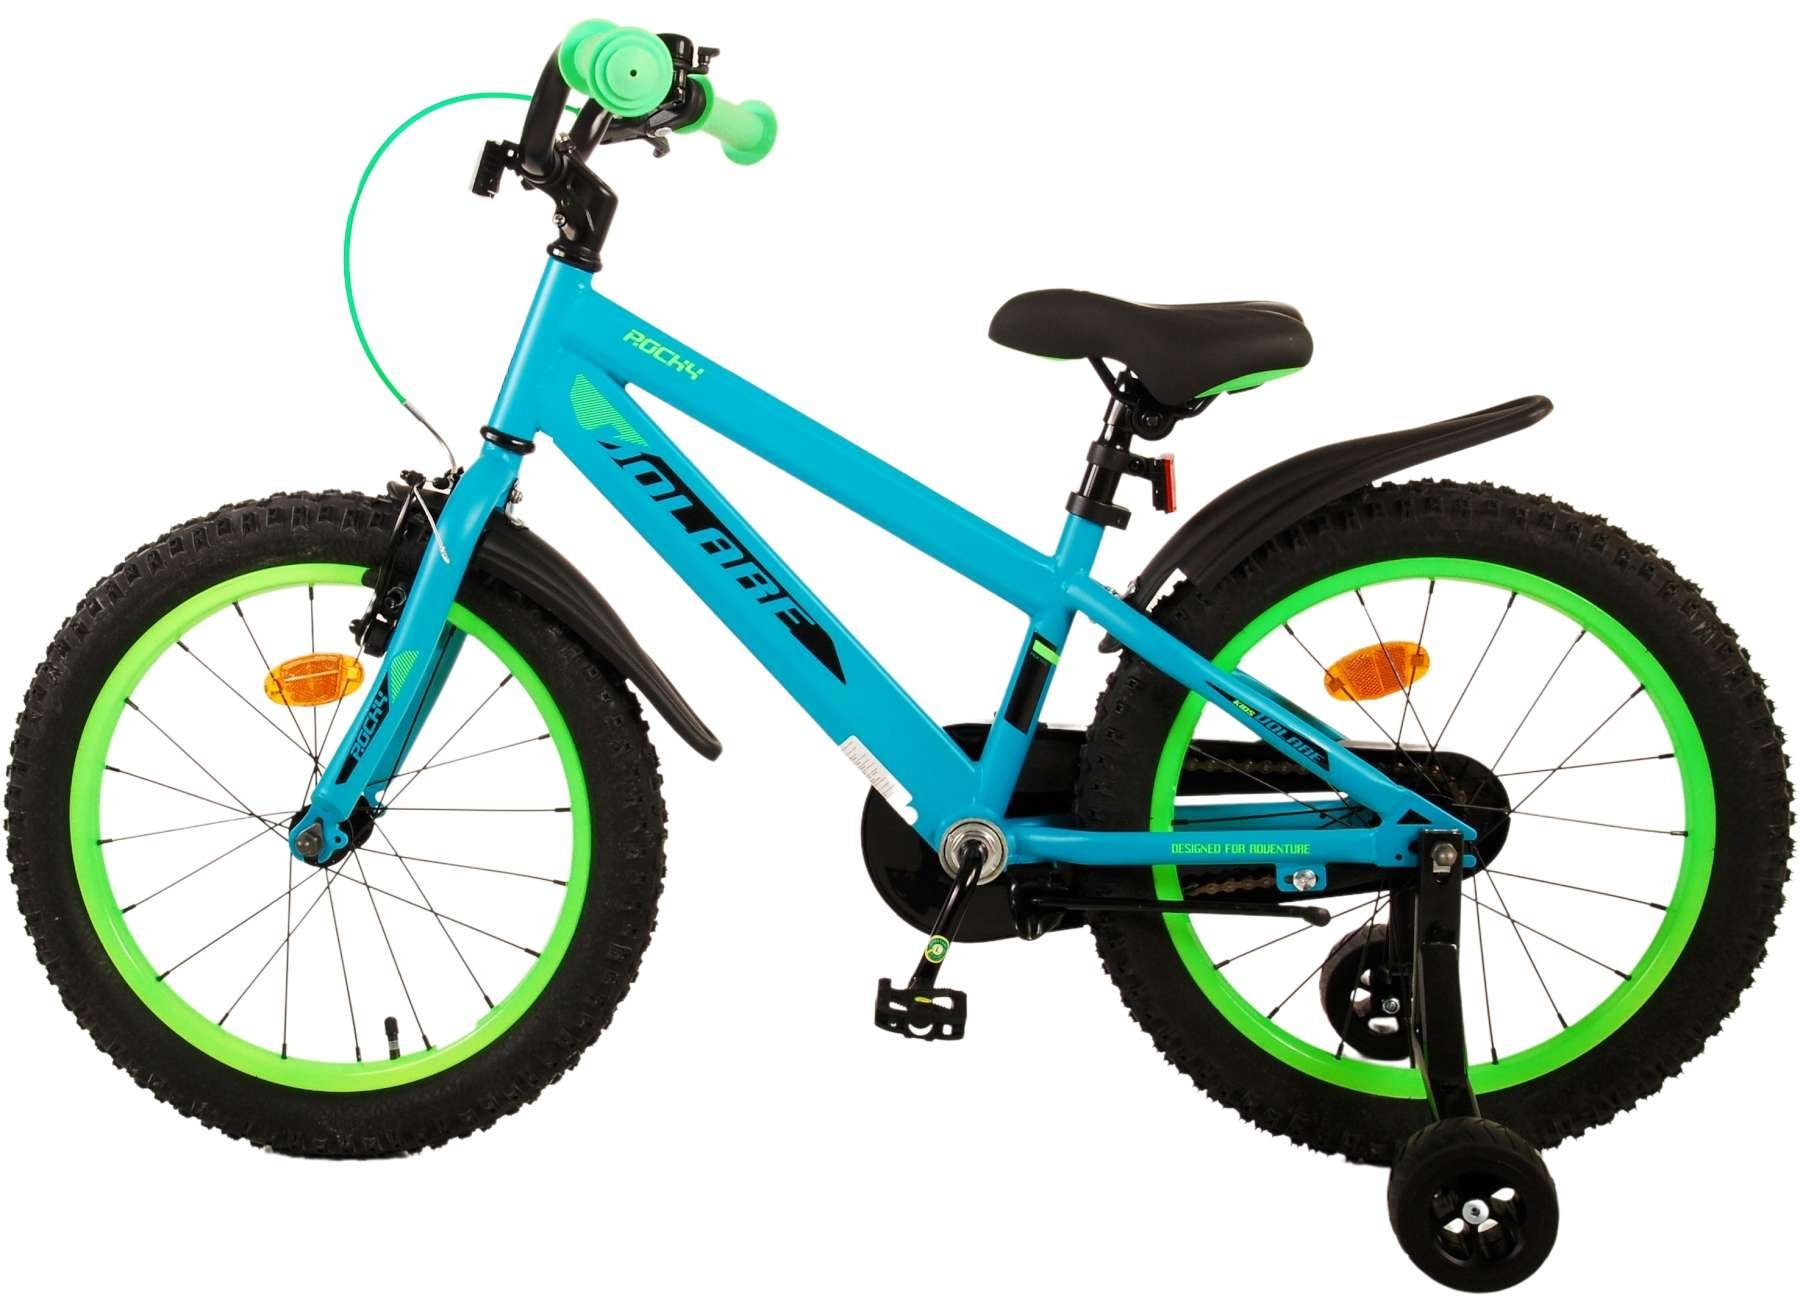 Blau Jungen & Kinderfahrrad - - Grün Handbremse Zoll 18 für LeNoSa Fahrrad Rücktrittbremse 4-7, Alter Adventure